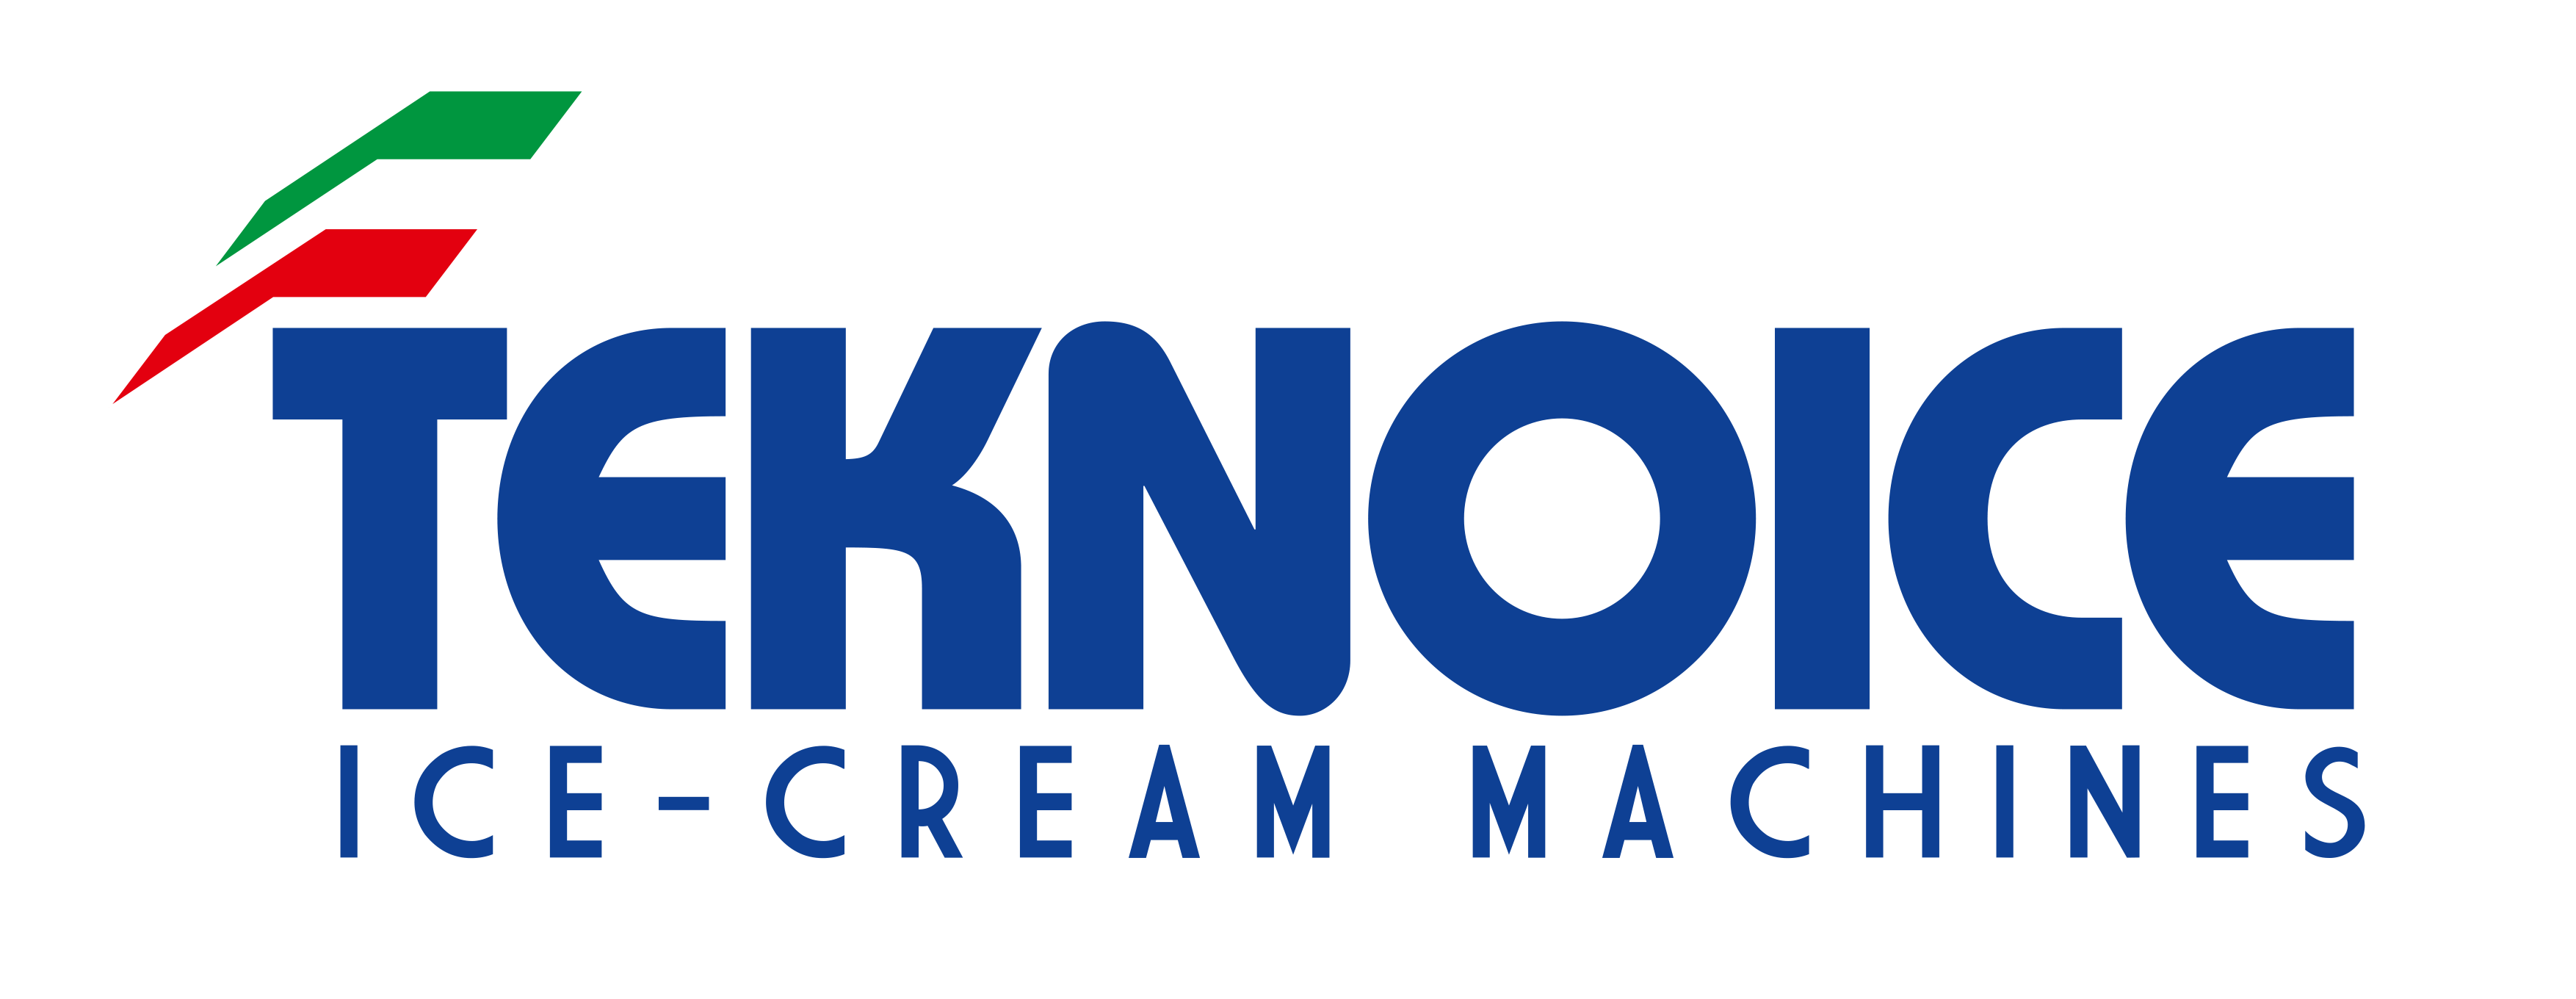 TEKNOICE 冰淇淋生产设备